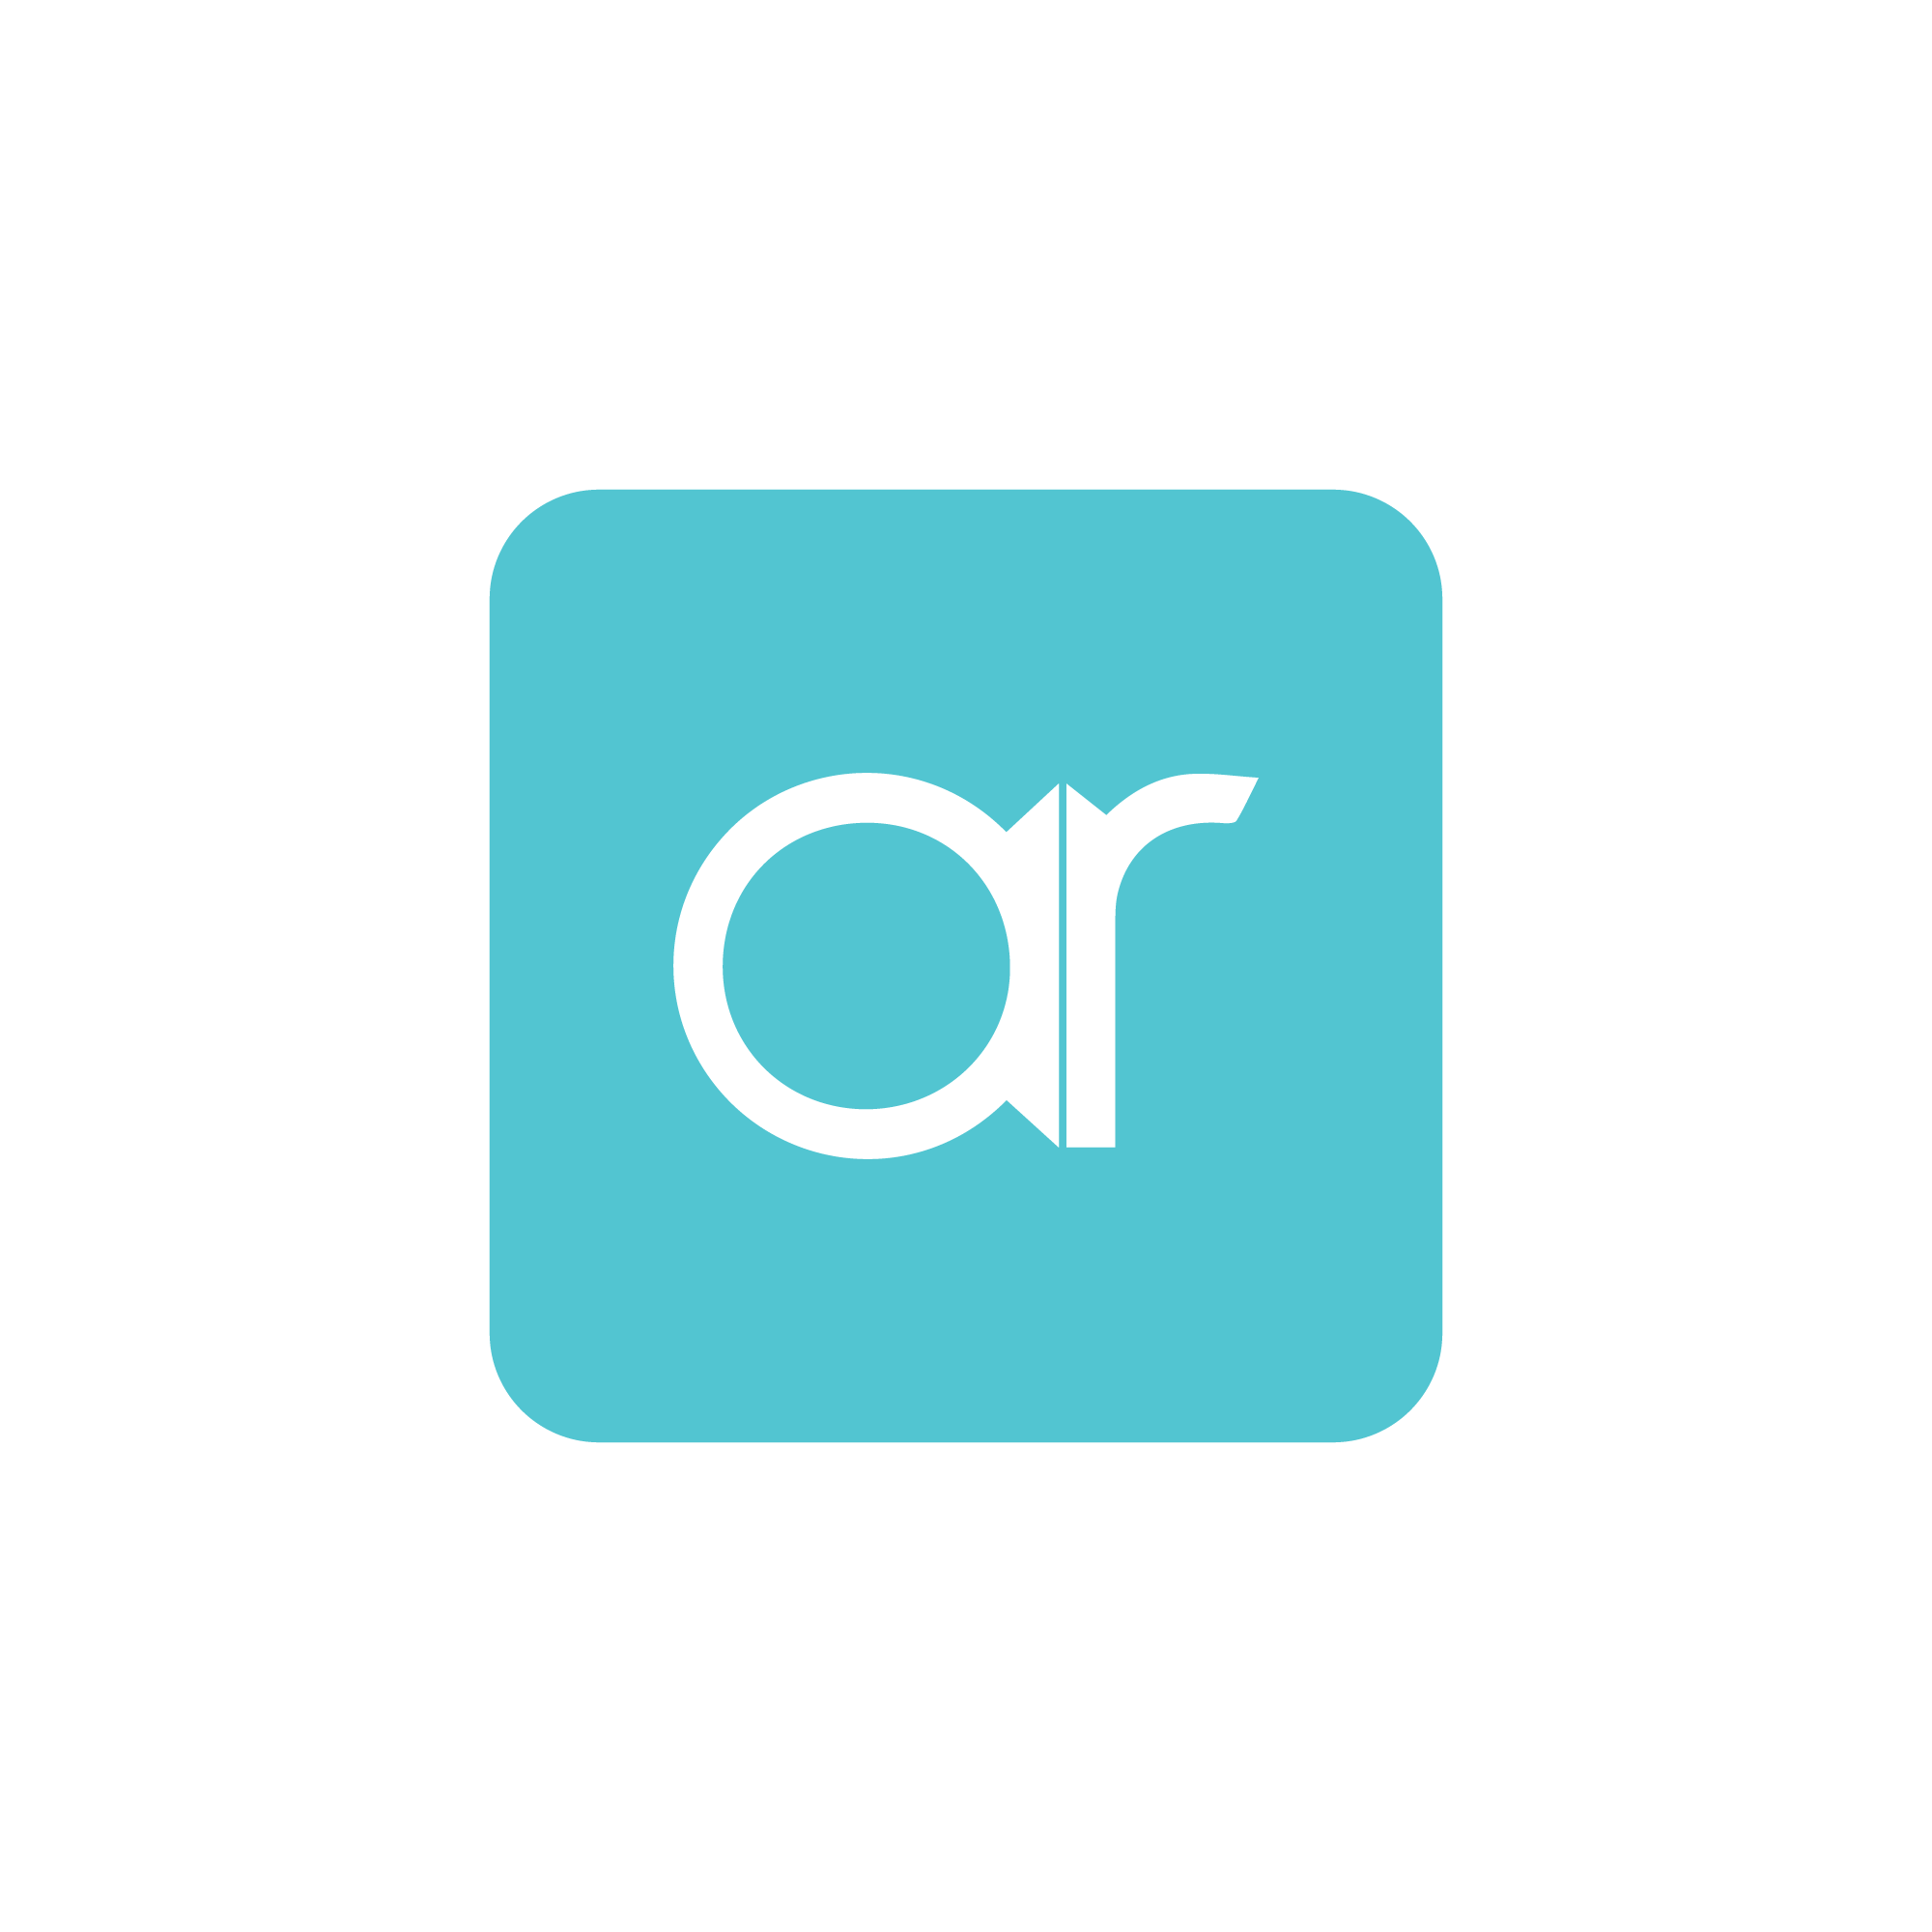 ar logo design by rajob Ali on Dribbble